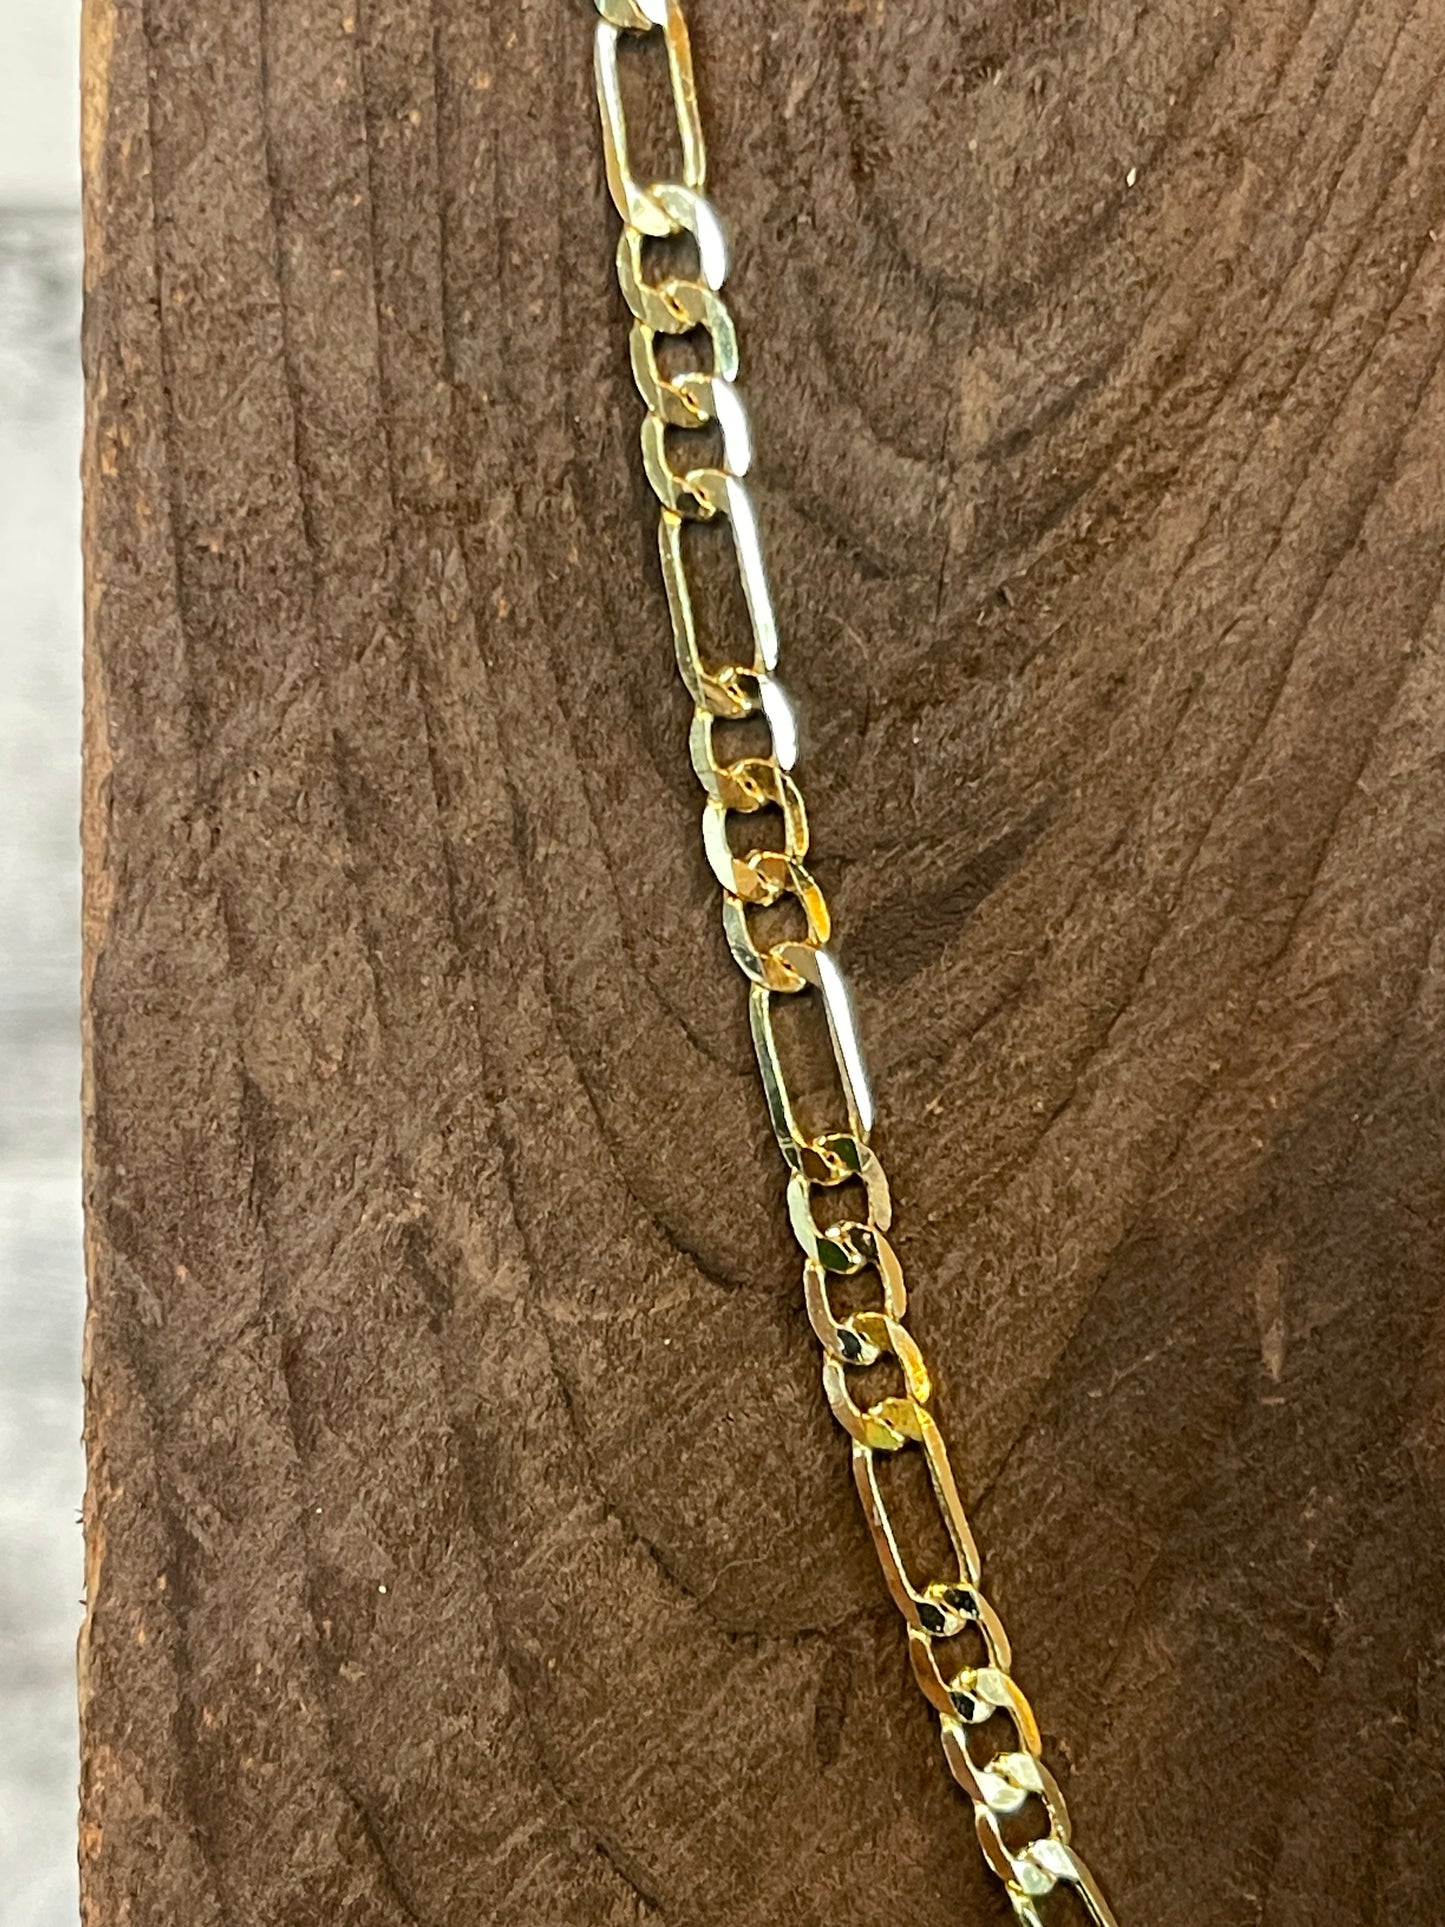 Morgan Chain Necklace